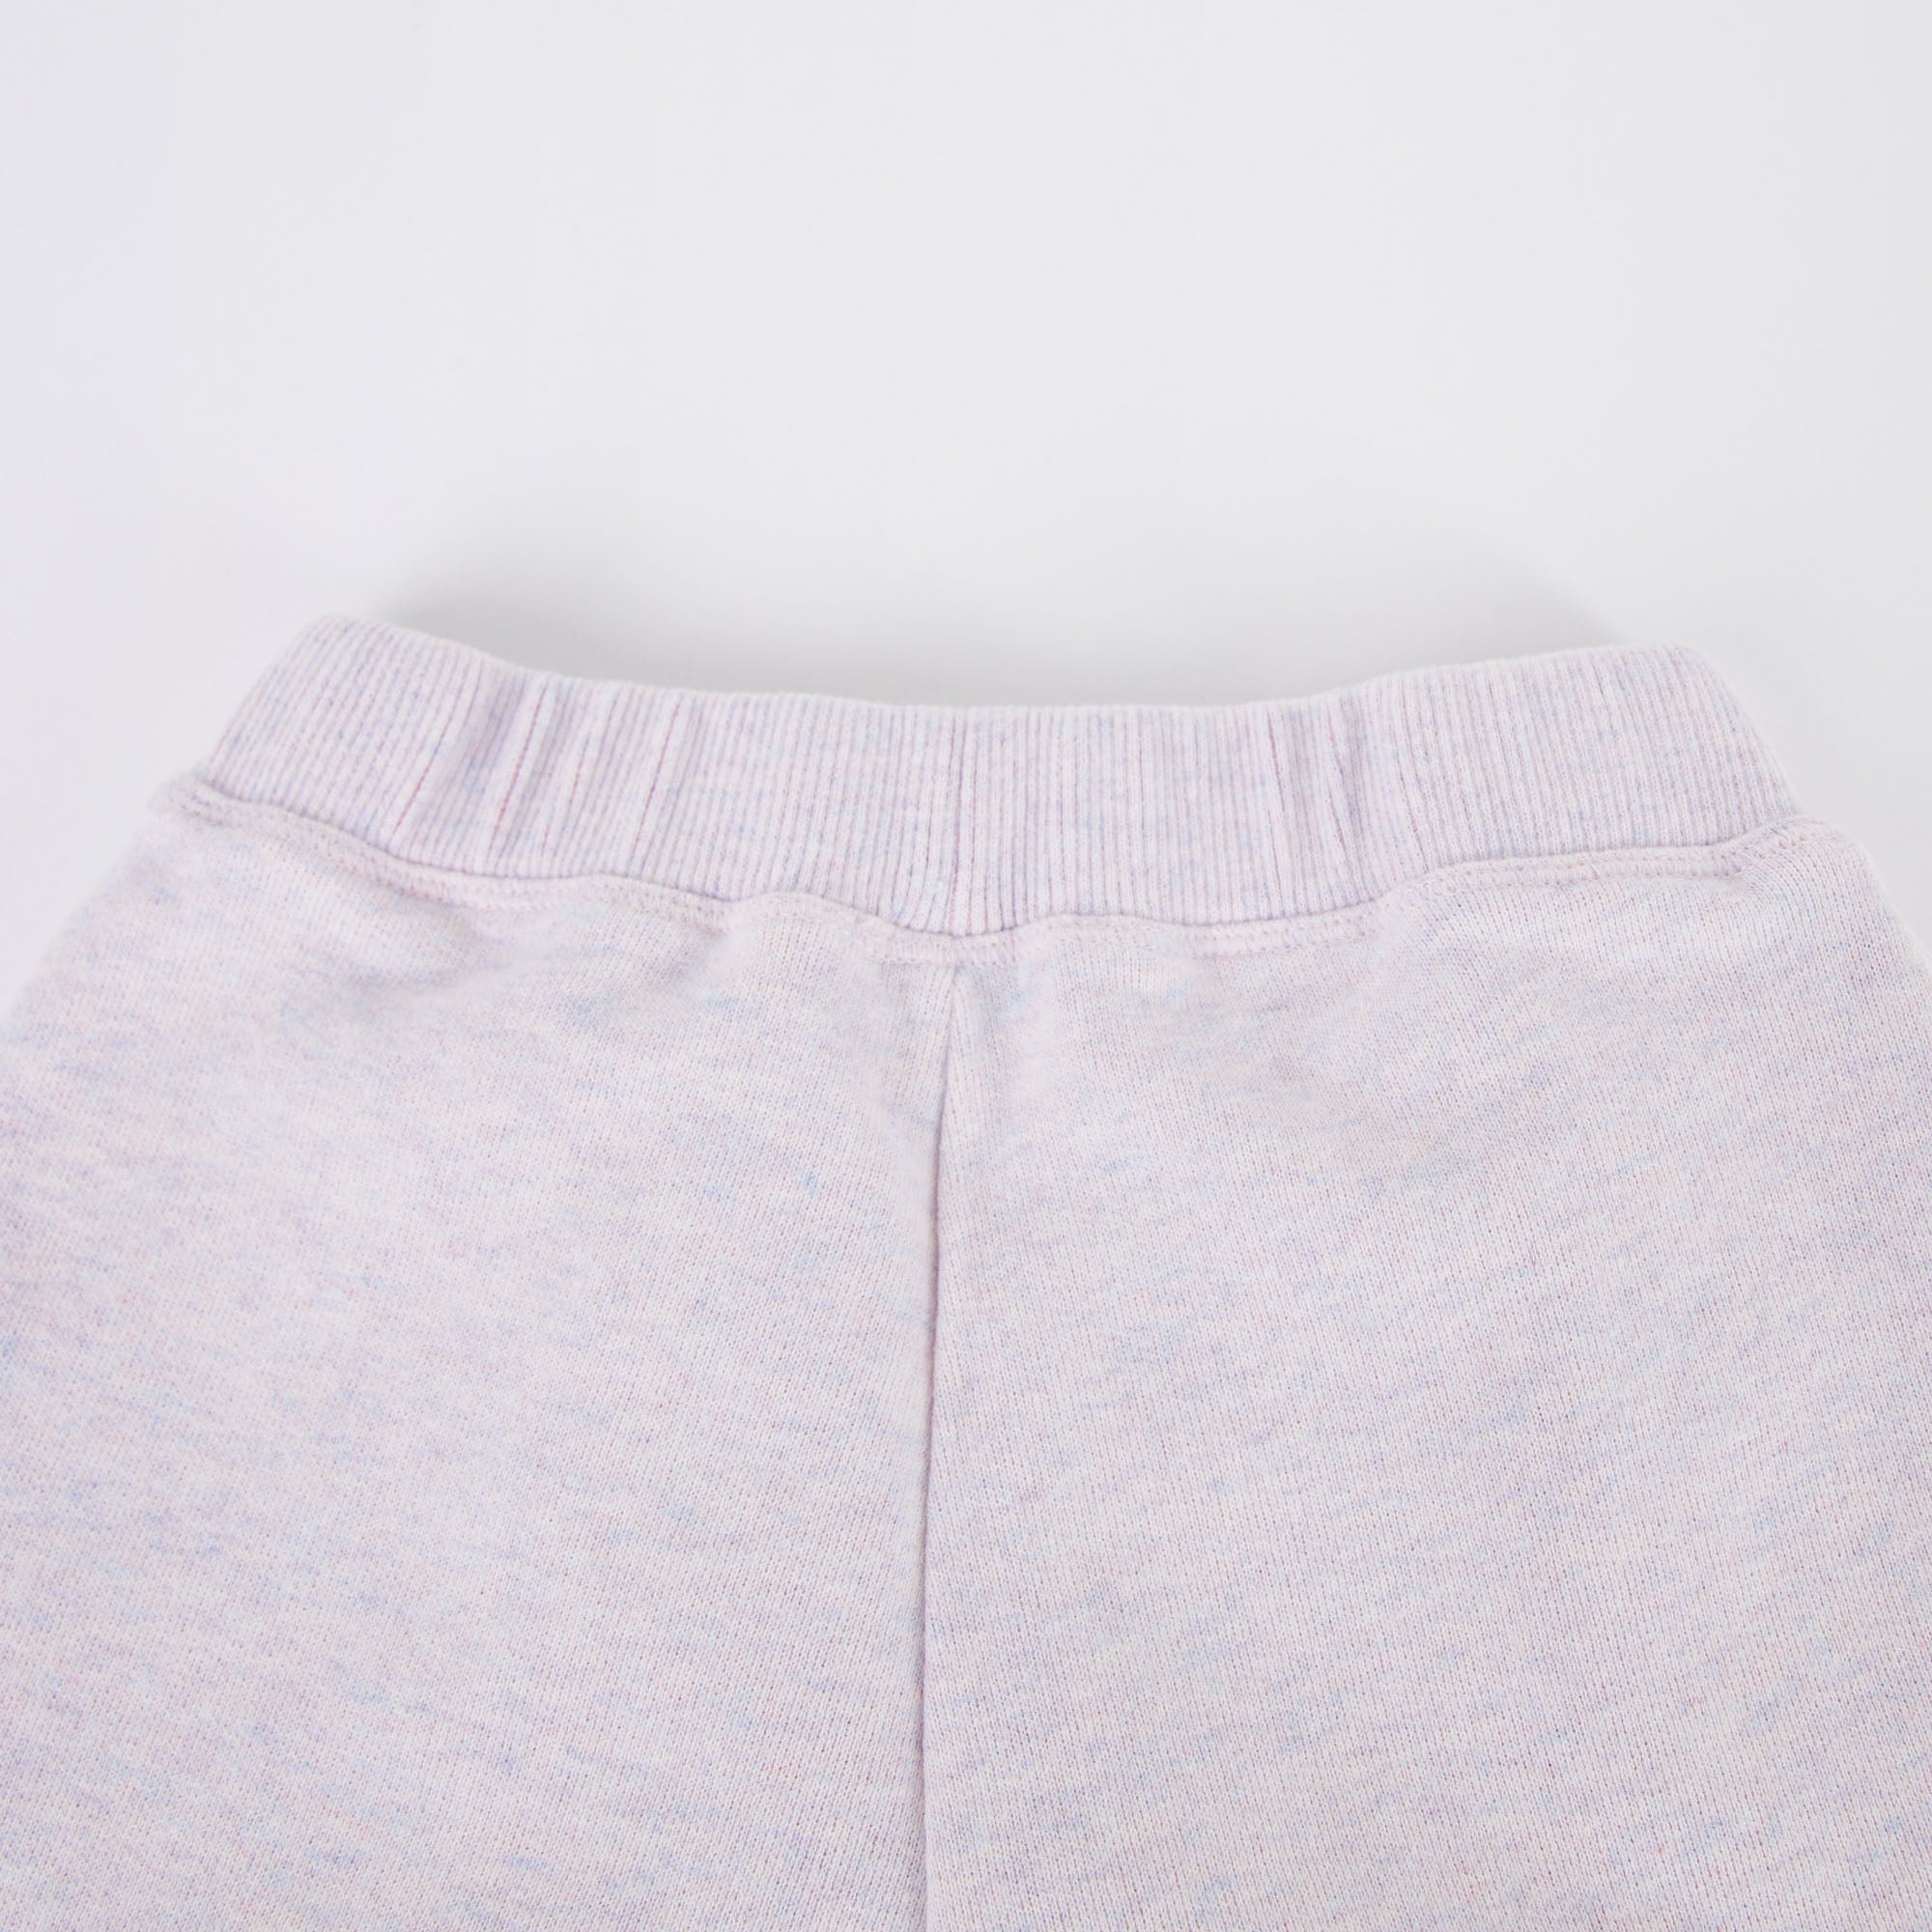 Girls Light Pink Cotton Shorts